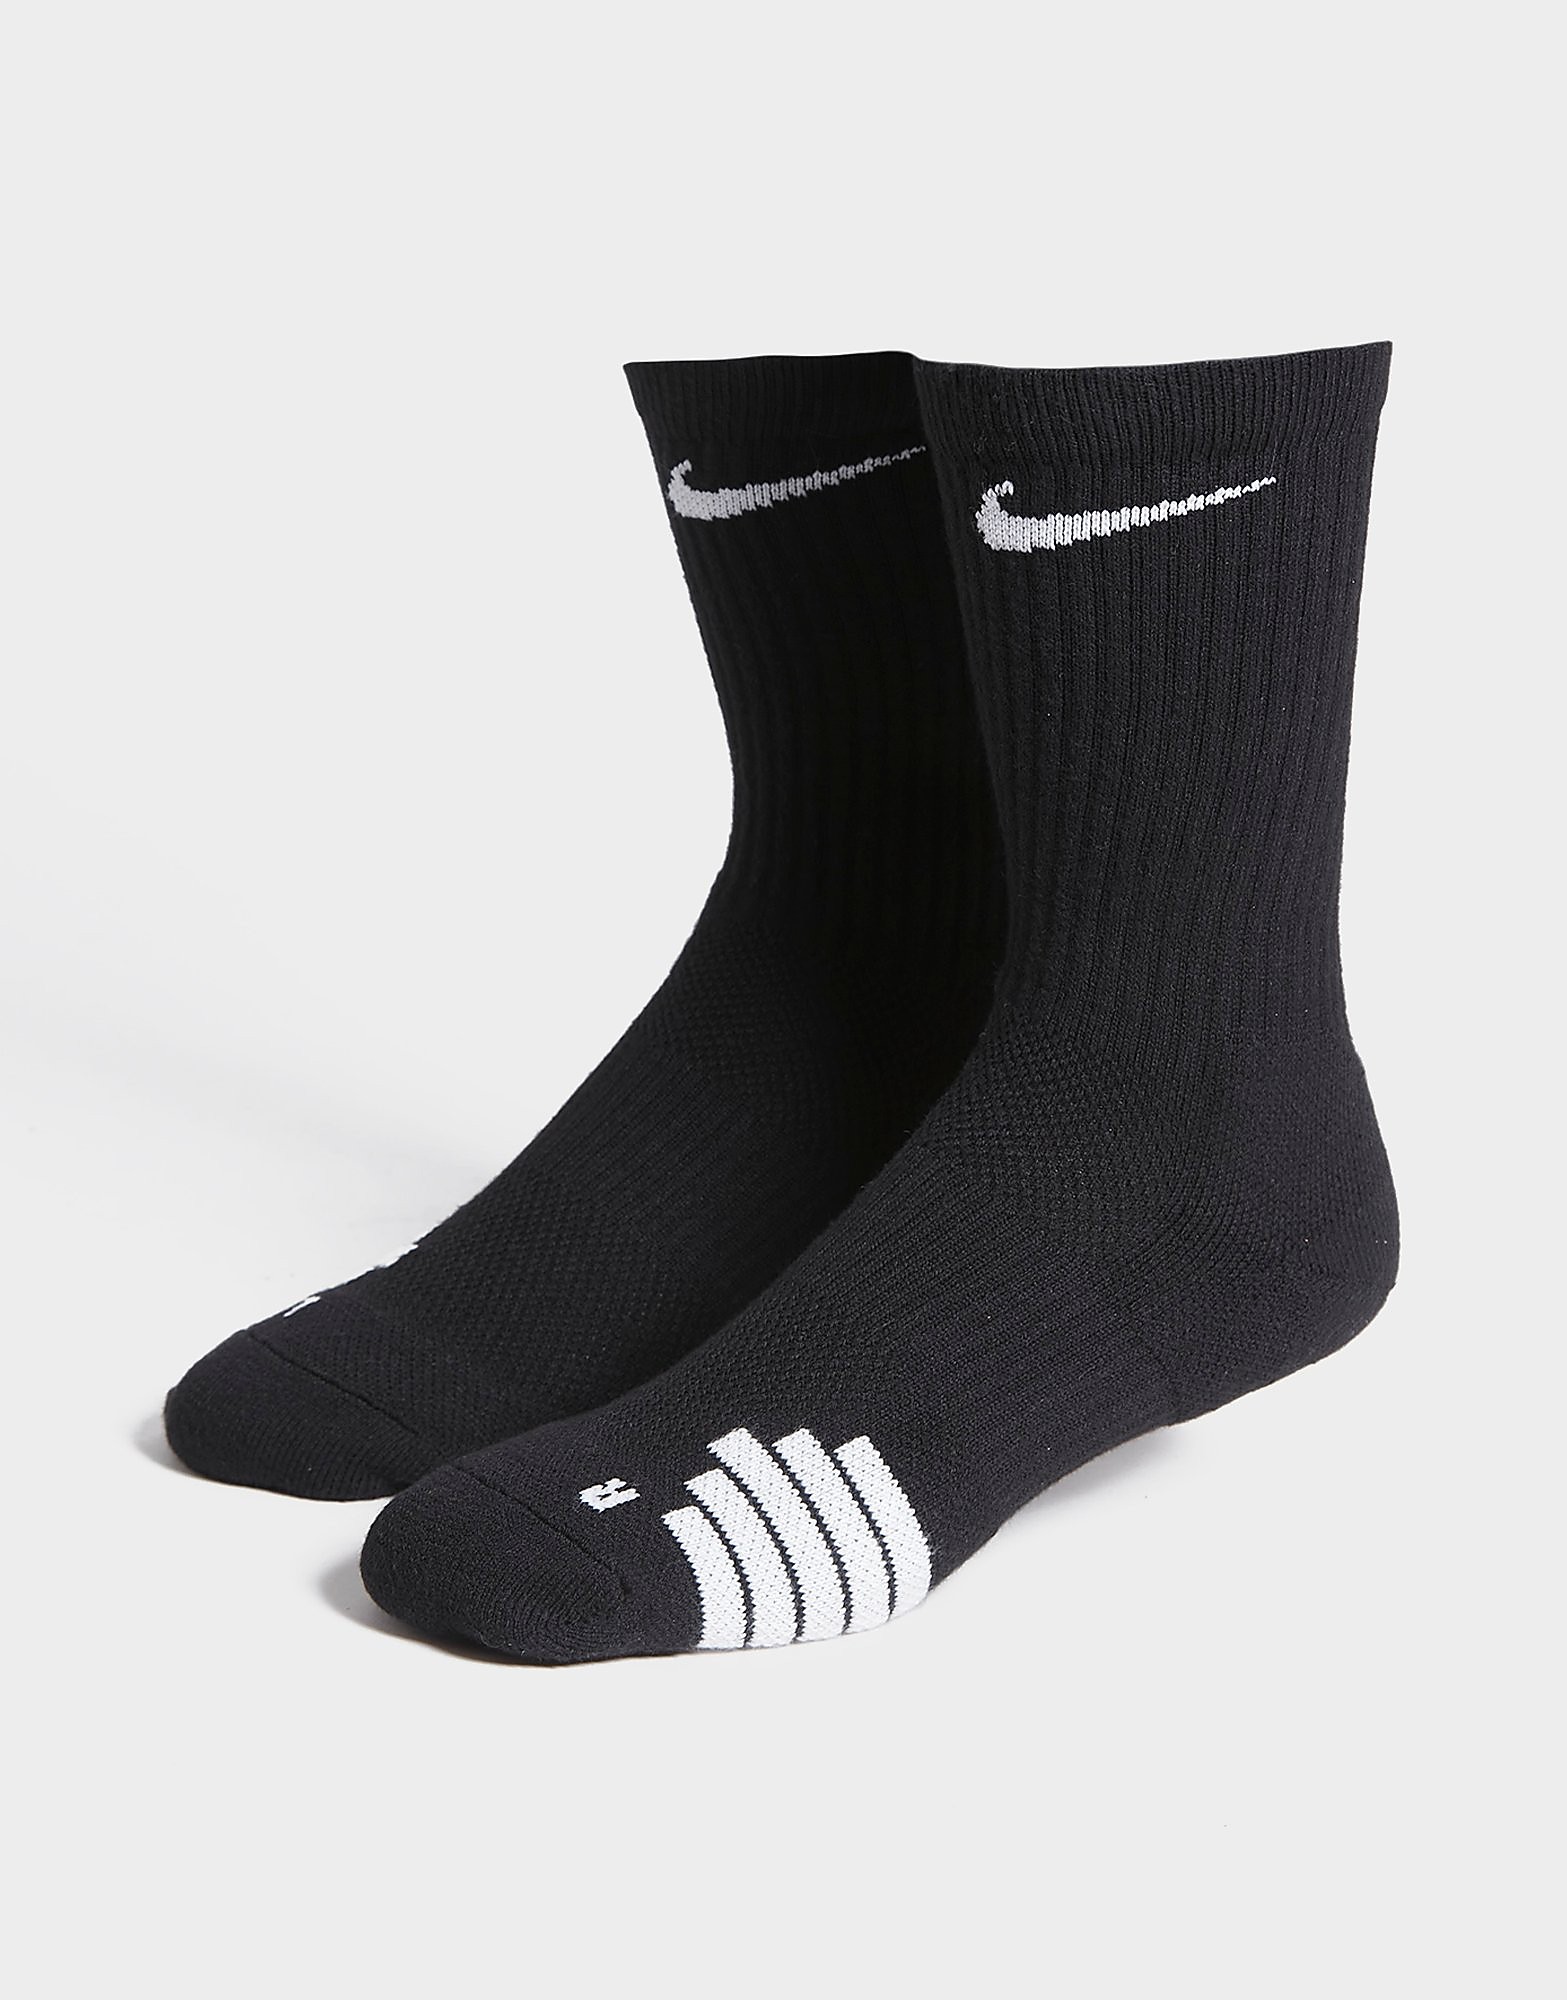 Nike elite-koripallosukat - mens, musta, nike